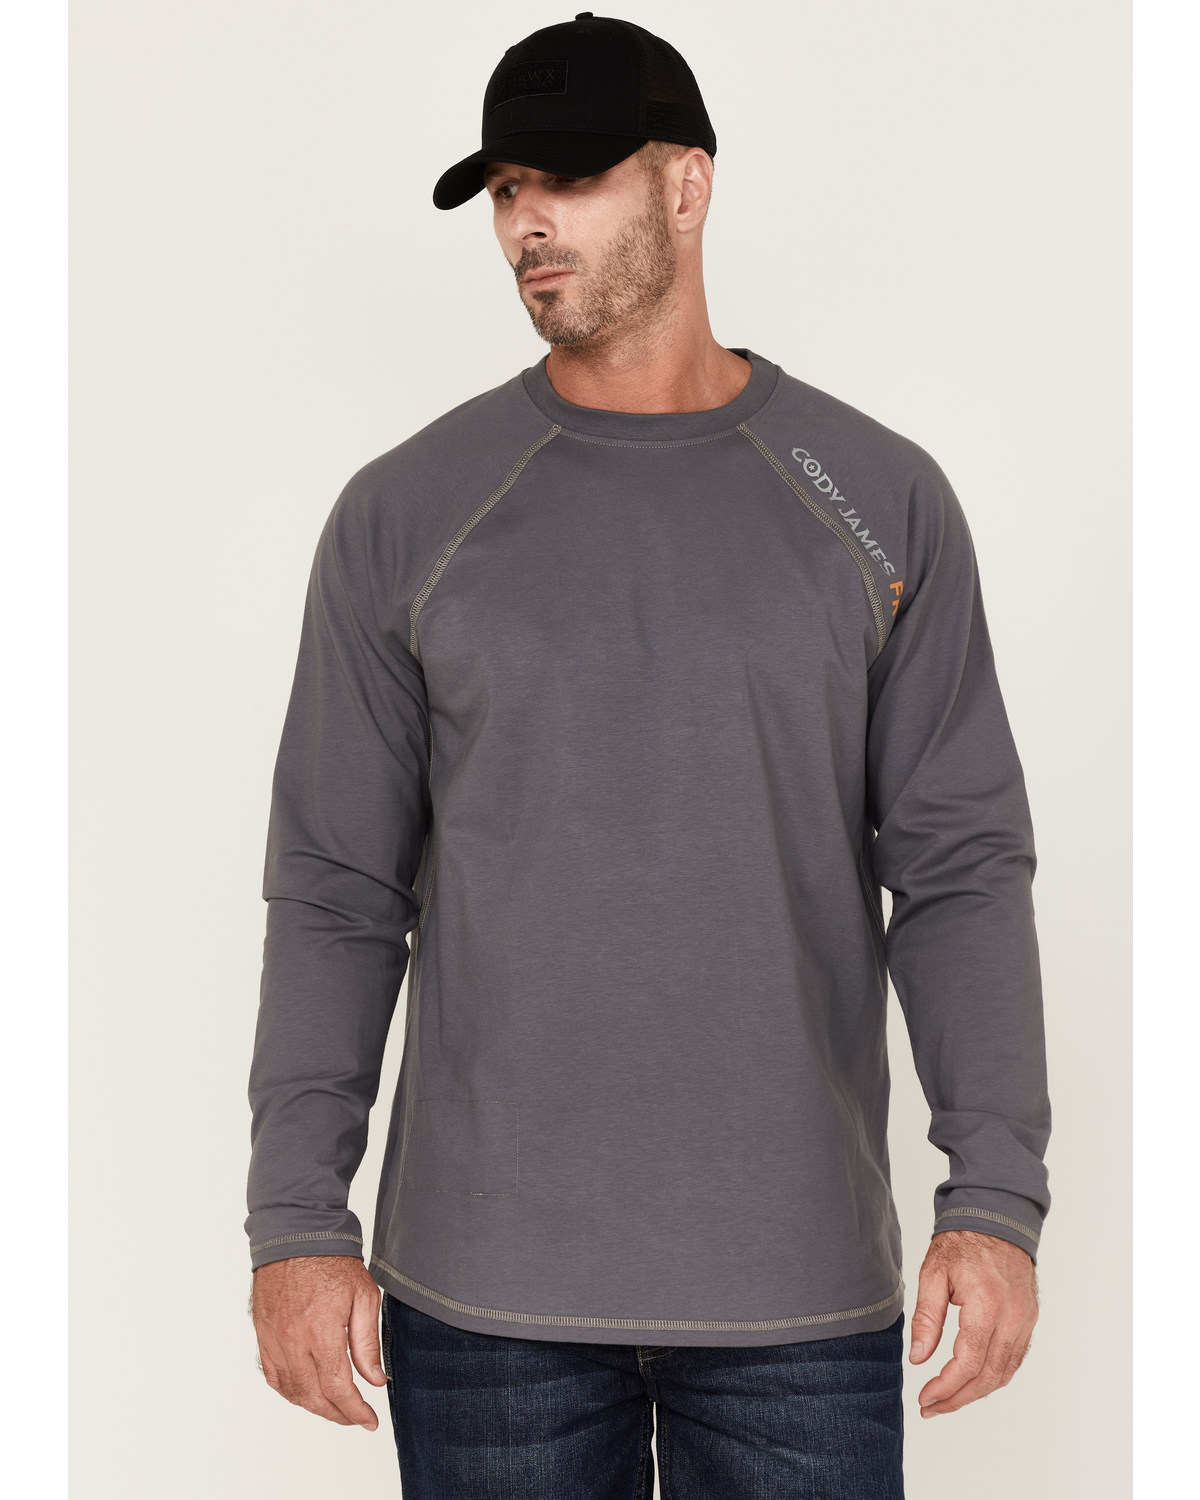 Cody James Men's FR Long Sleeve Raglan Work T-Shirt